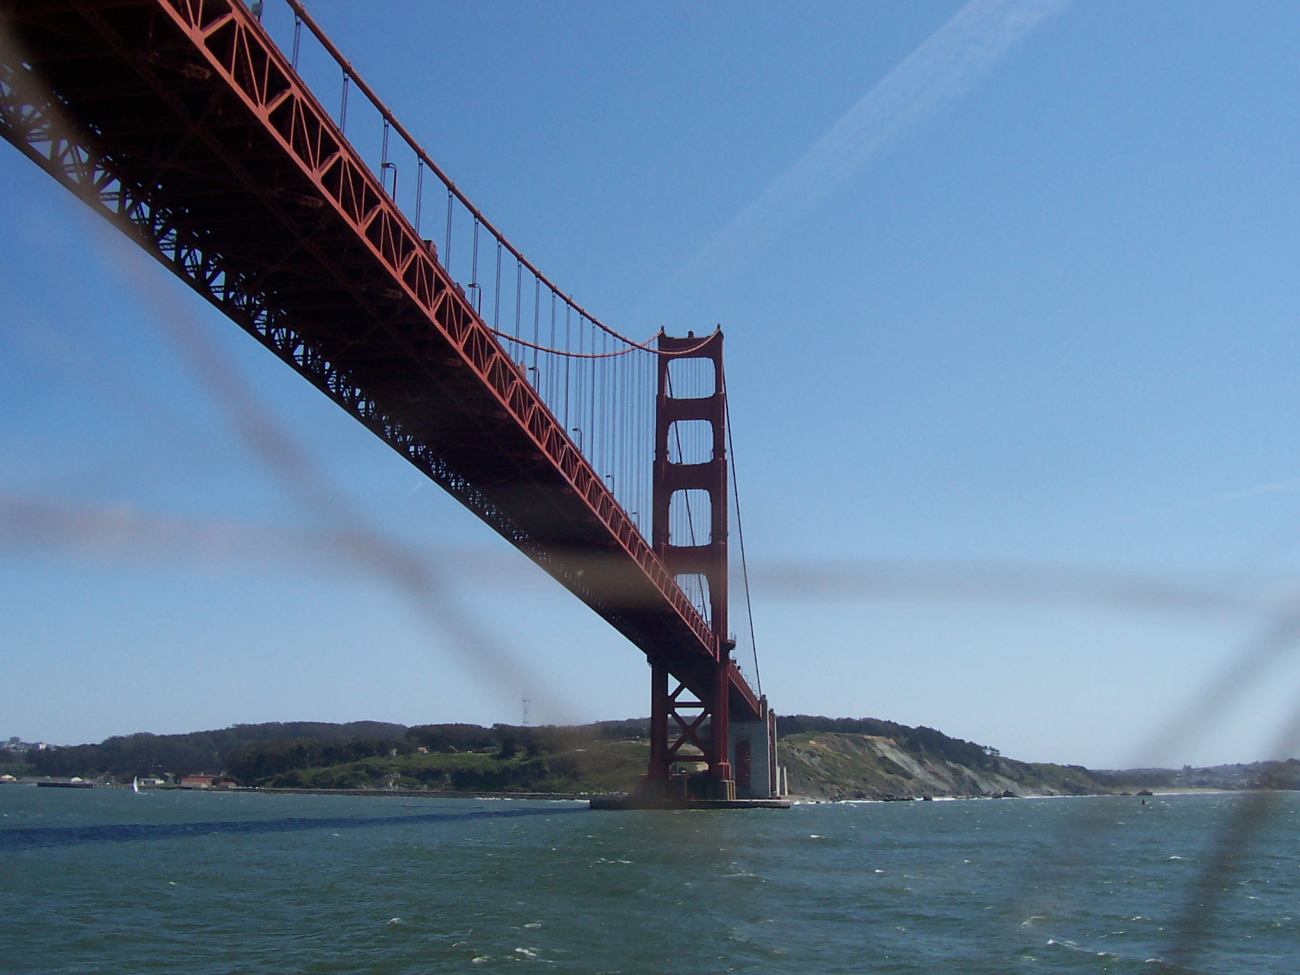 South pier of the Golden Gate Bridge seen looking back as theMILLER FREEMAN departs San Francisco Bay